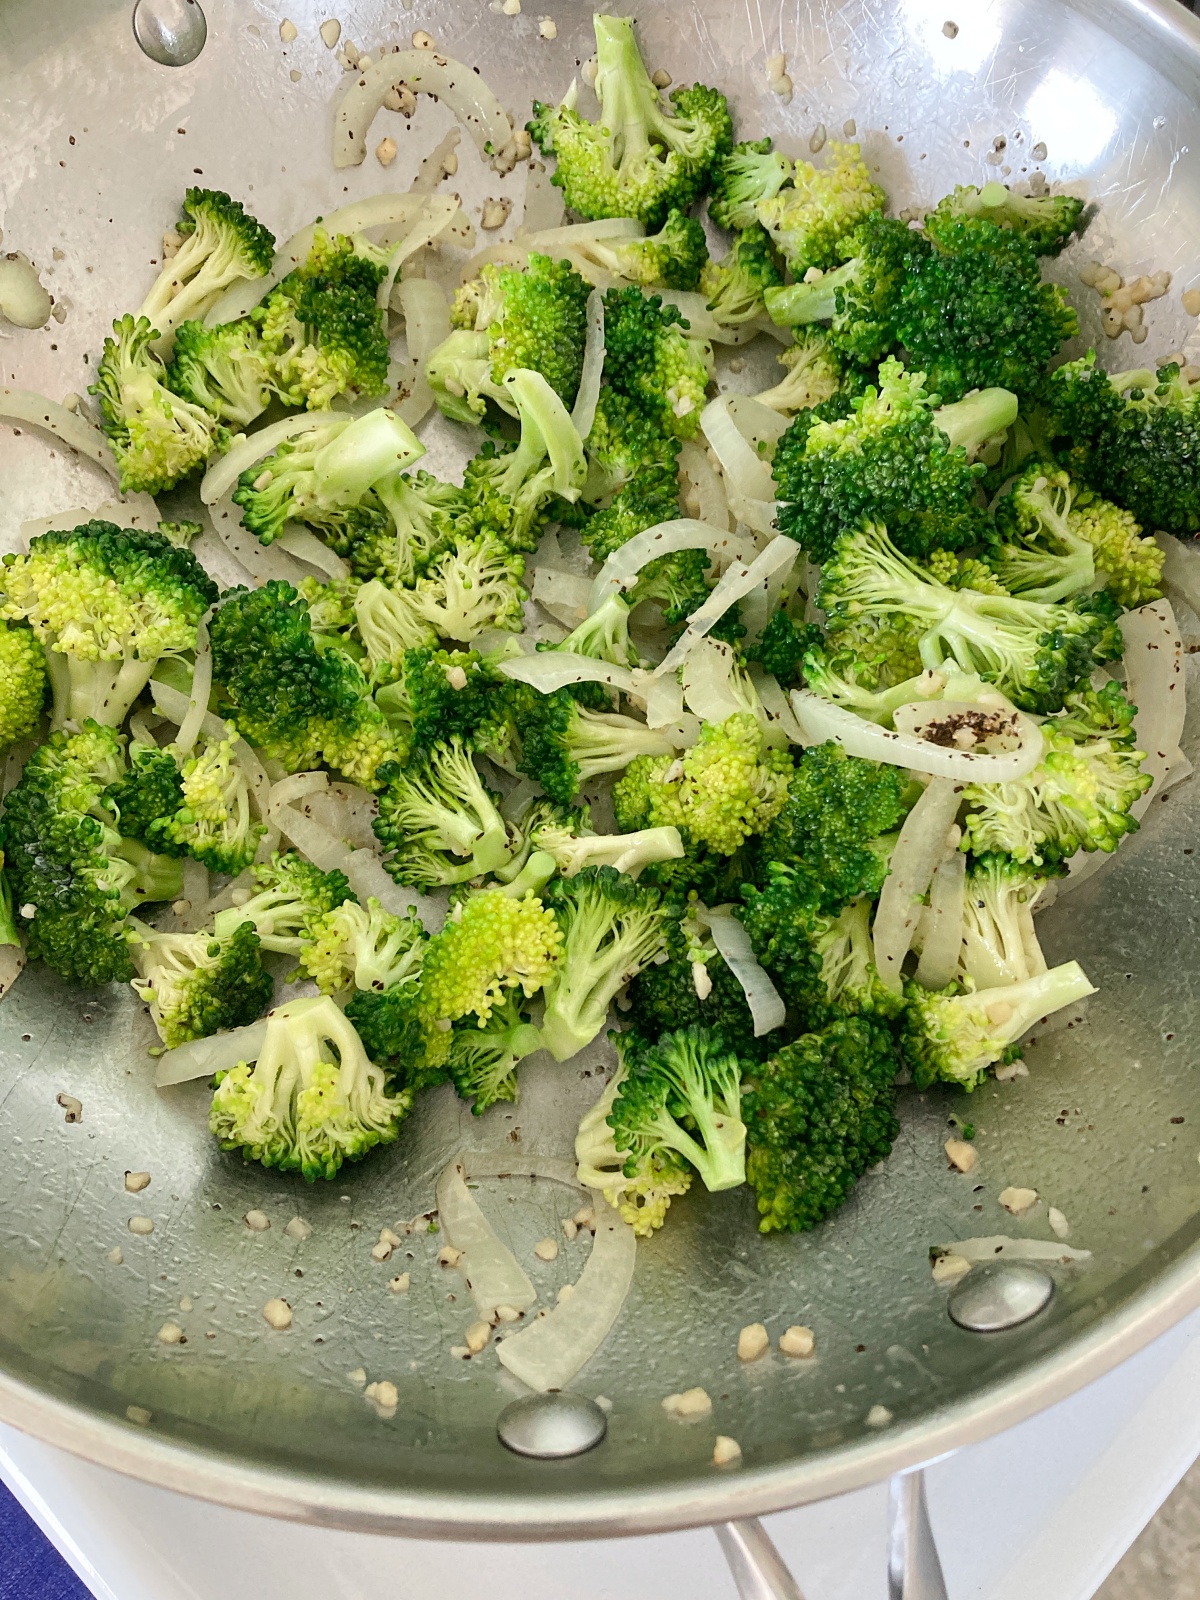 Ree Drummond's Broccoli Cheese Stromboli 